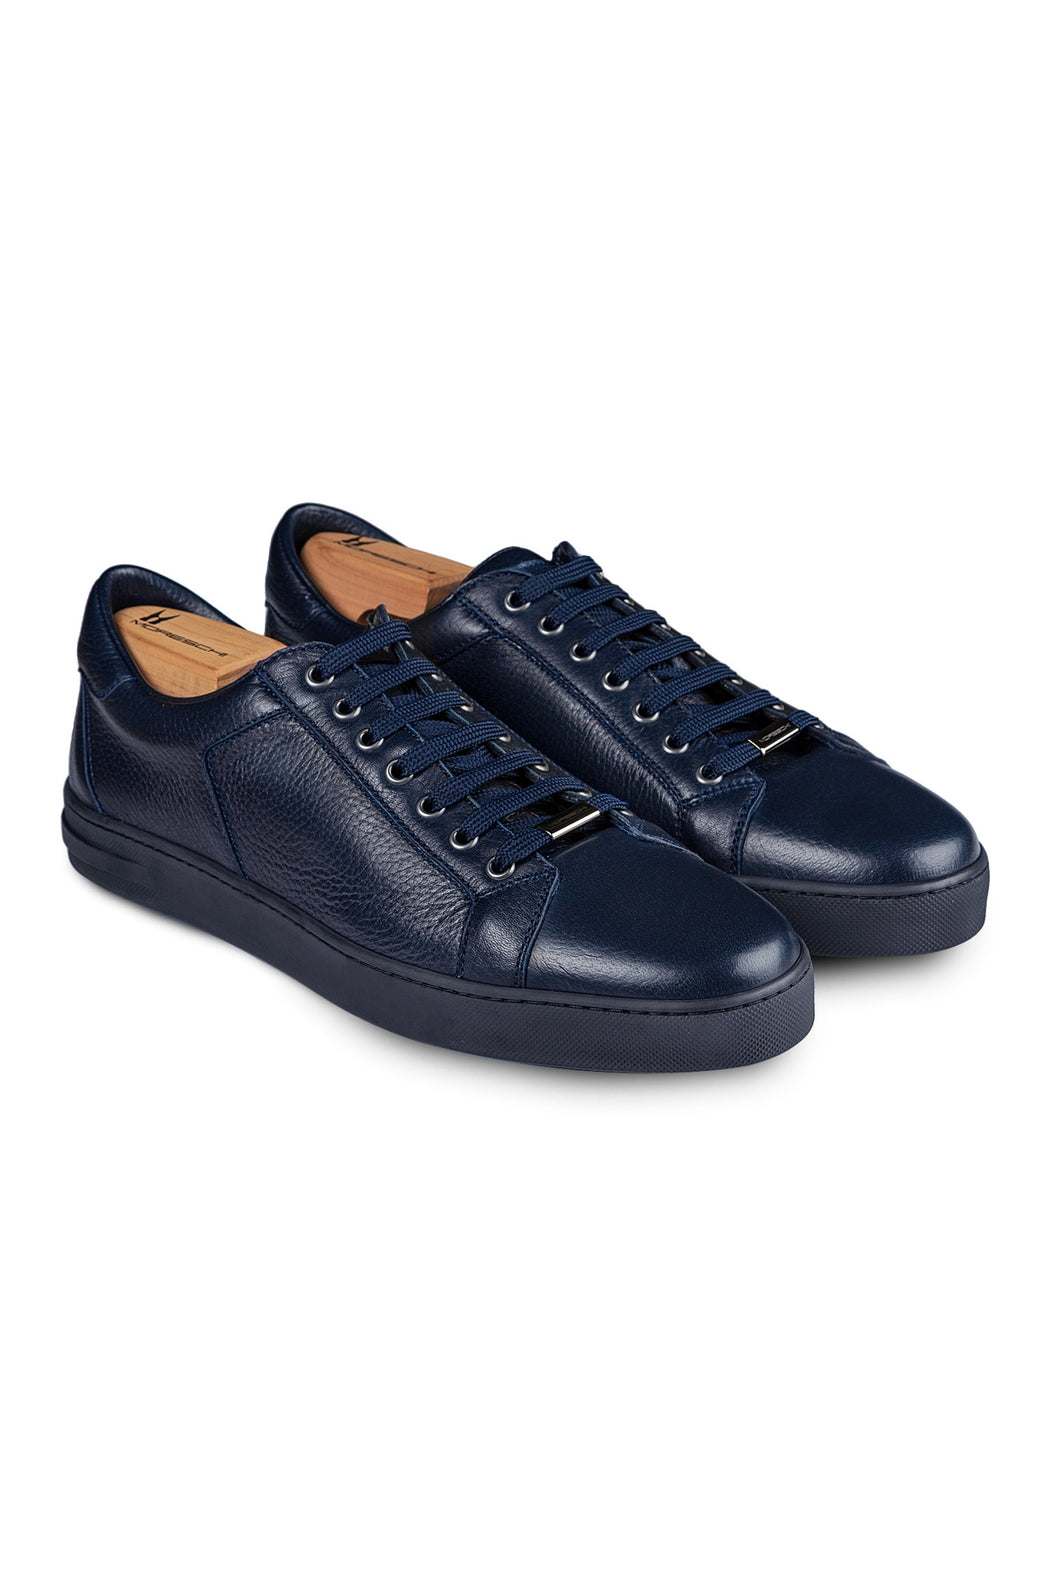 Bottega Senatore - Virginio - Mocassino - Tassels - Italian Handmade Man  Shoes - High Quality Leather Shoes - Avvenice